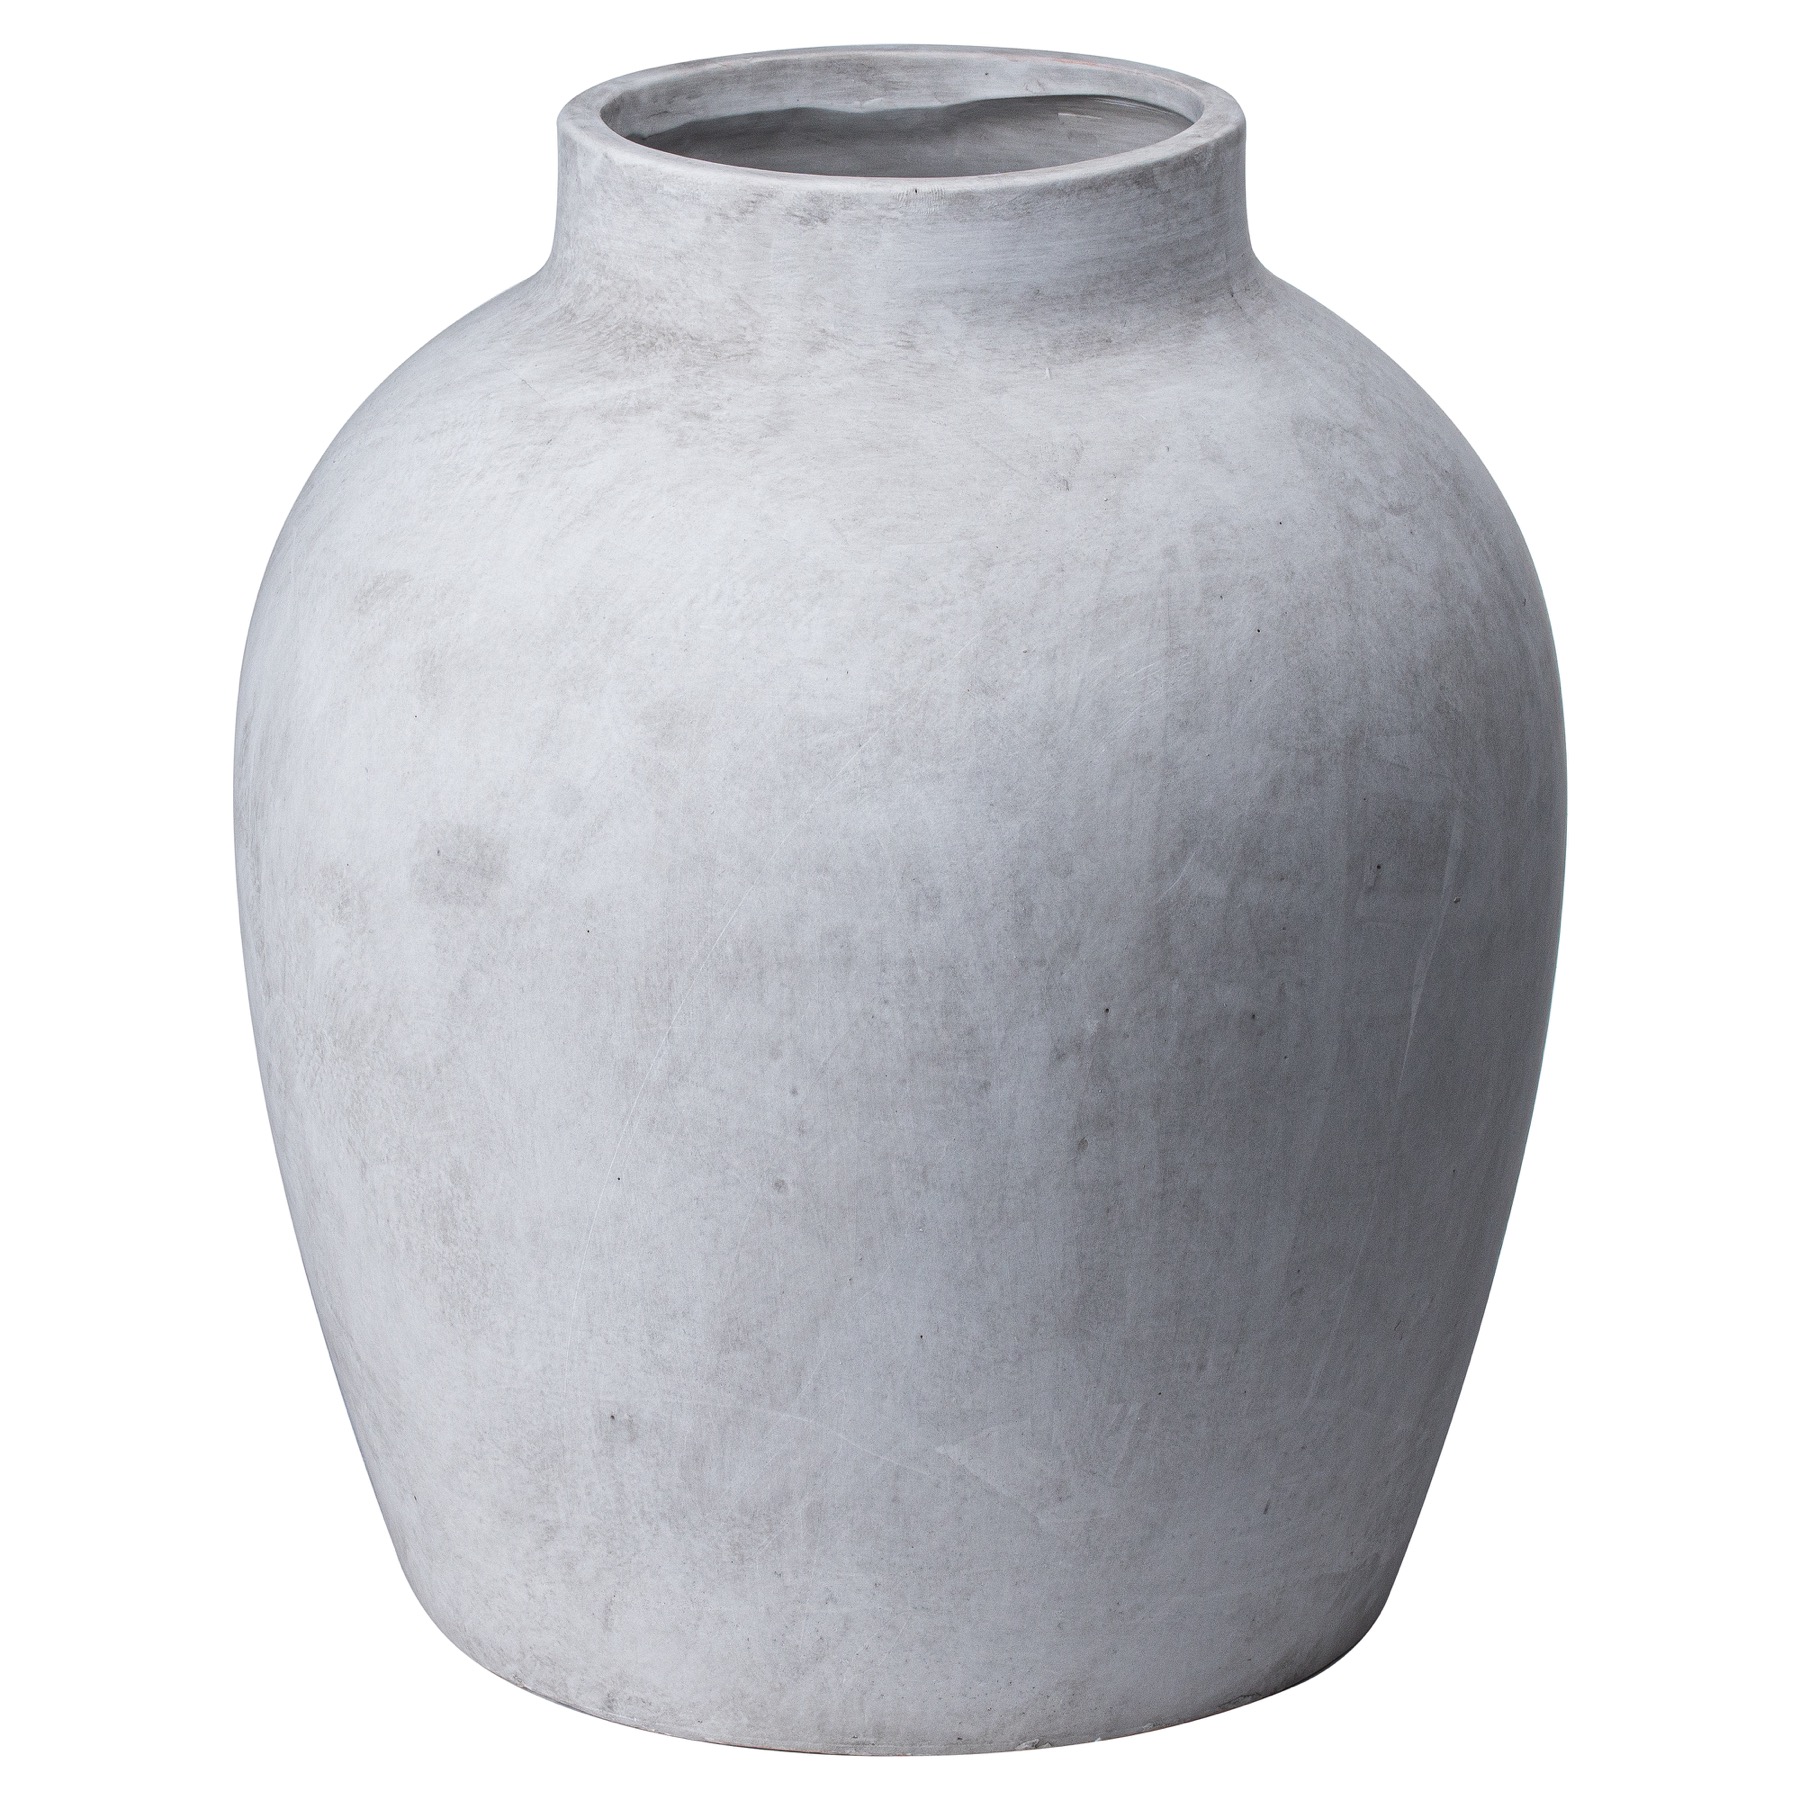 Darcy Stone Vase - Image 1